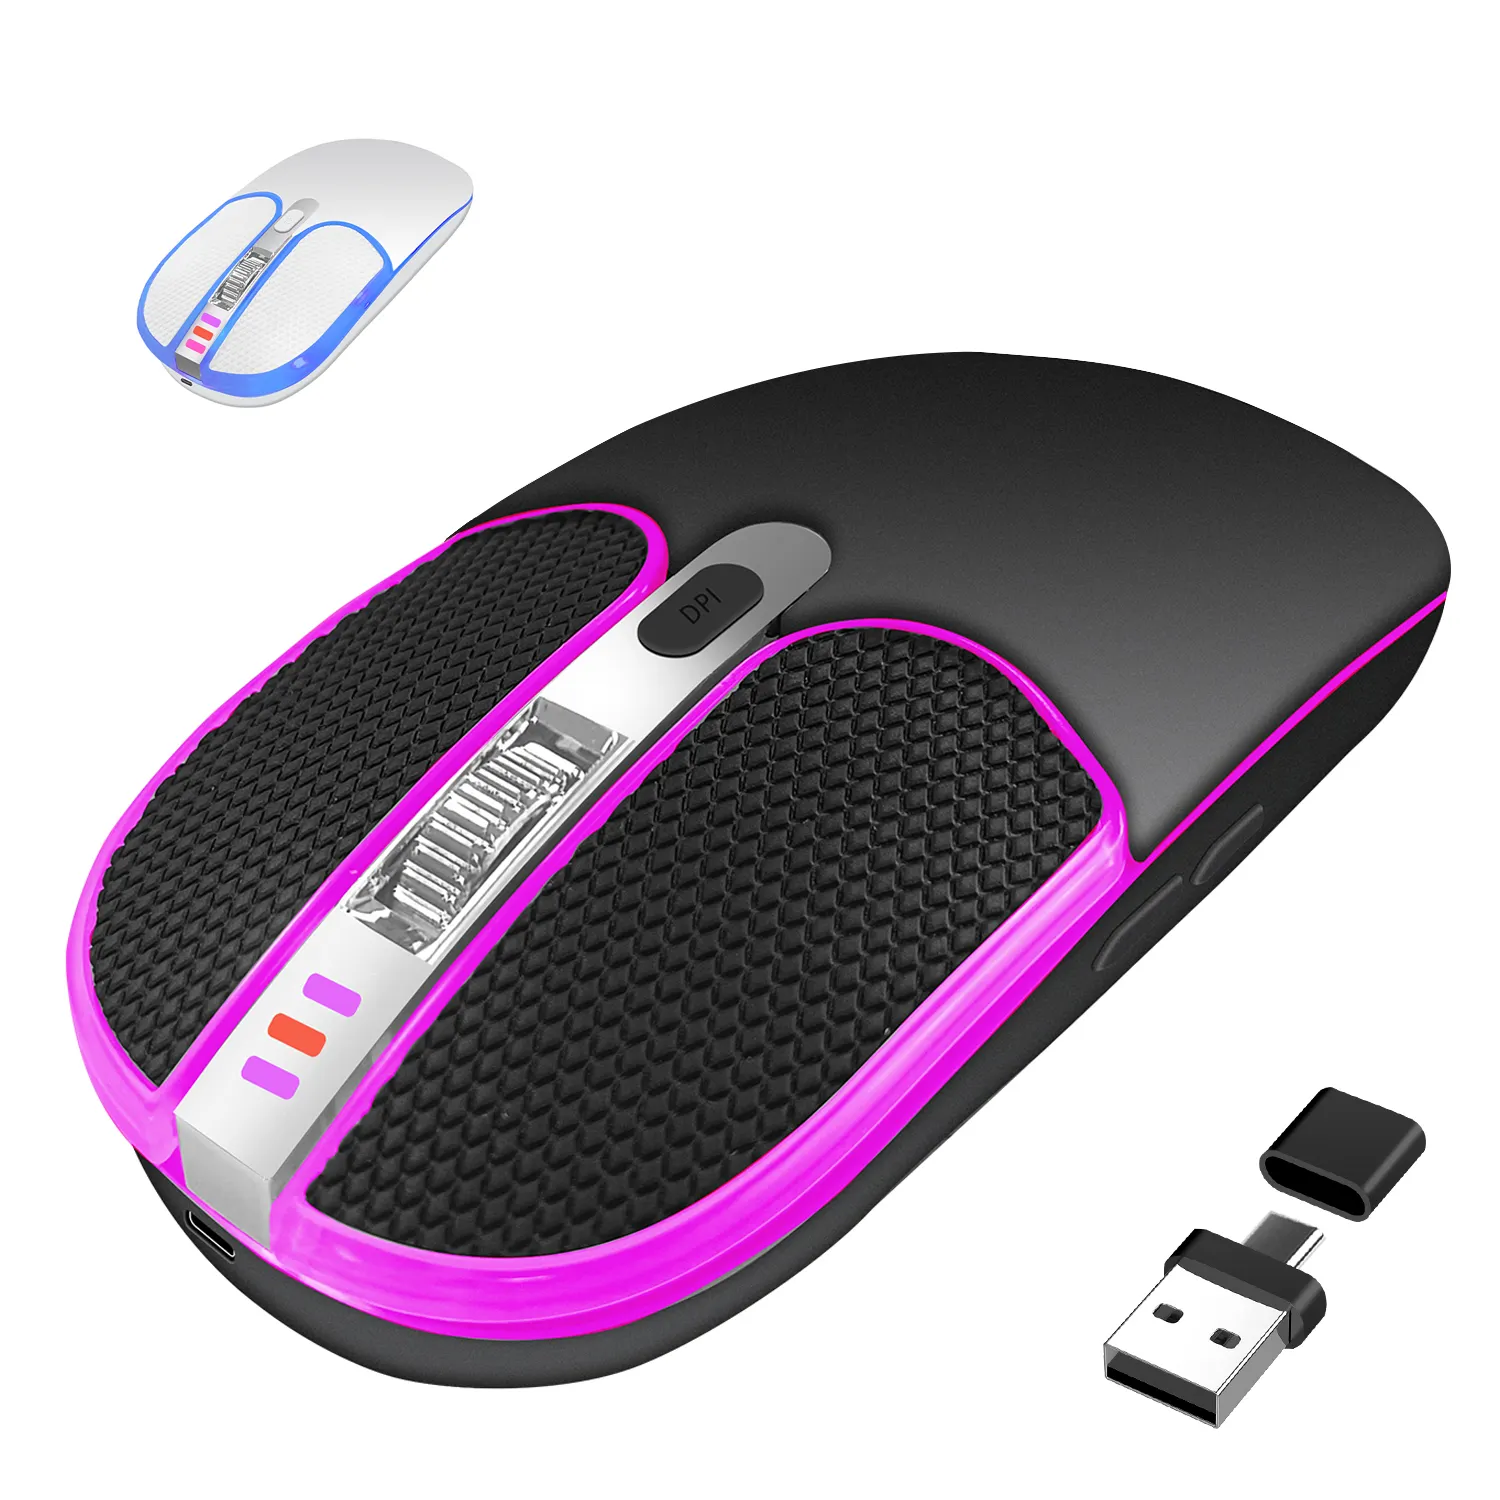 Mouse senza fili per Laptop 2.4G Ultra sottile Mouse silenzioso con USB Nano 2400 DPI Mouse portatile portatile portatile senza fili